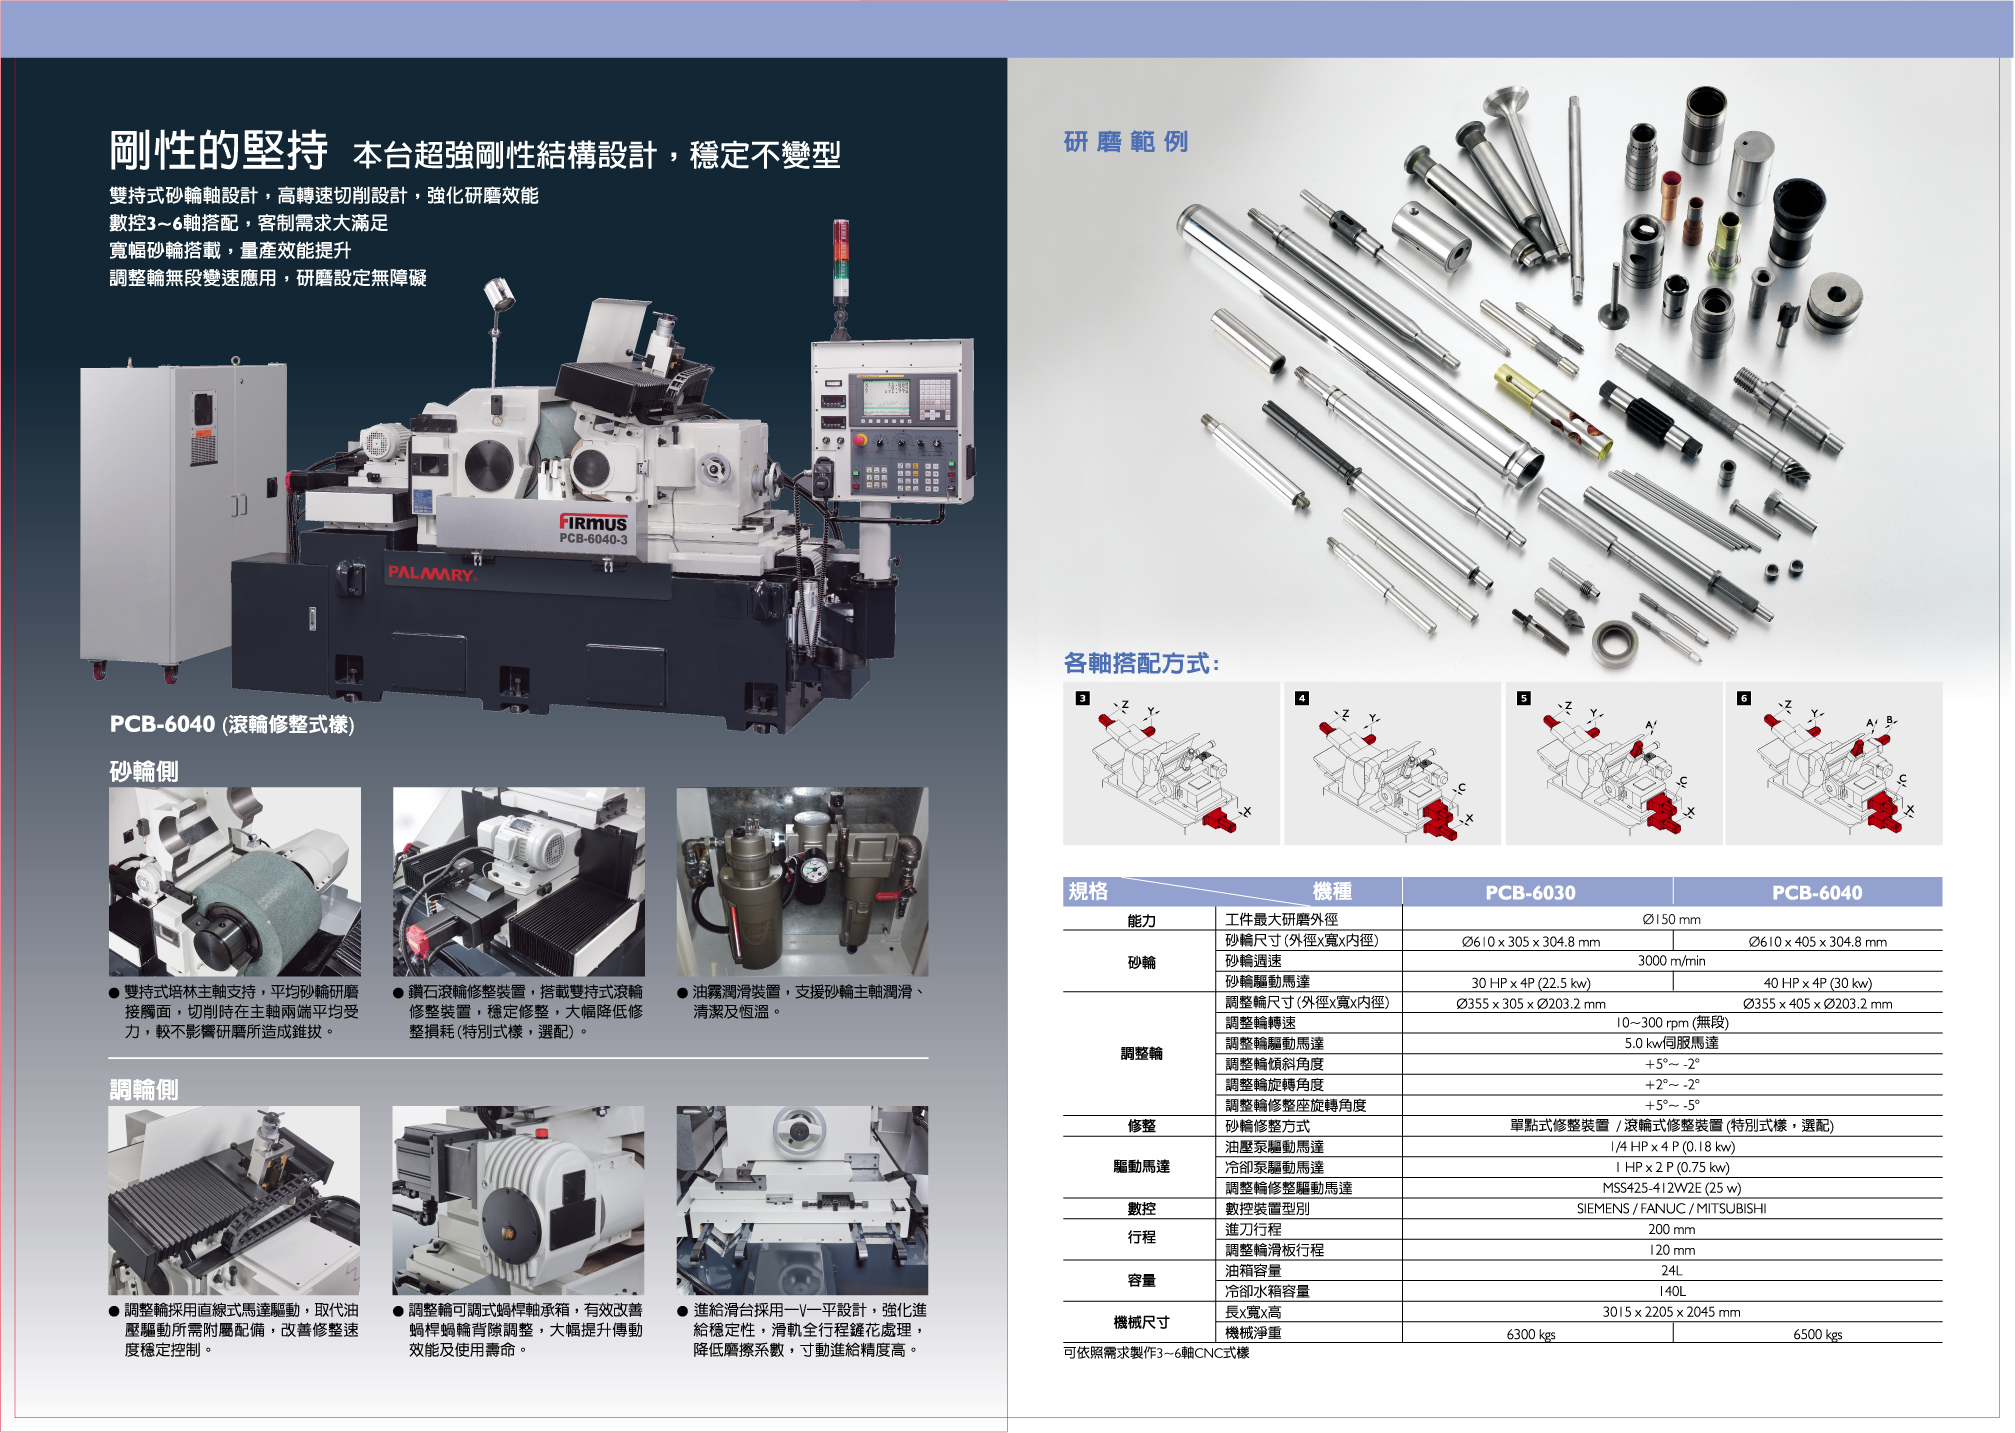 CNC 無心磨床-培林式主軸系列 PCB-6040-3